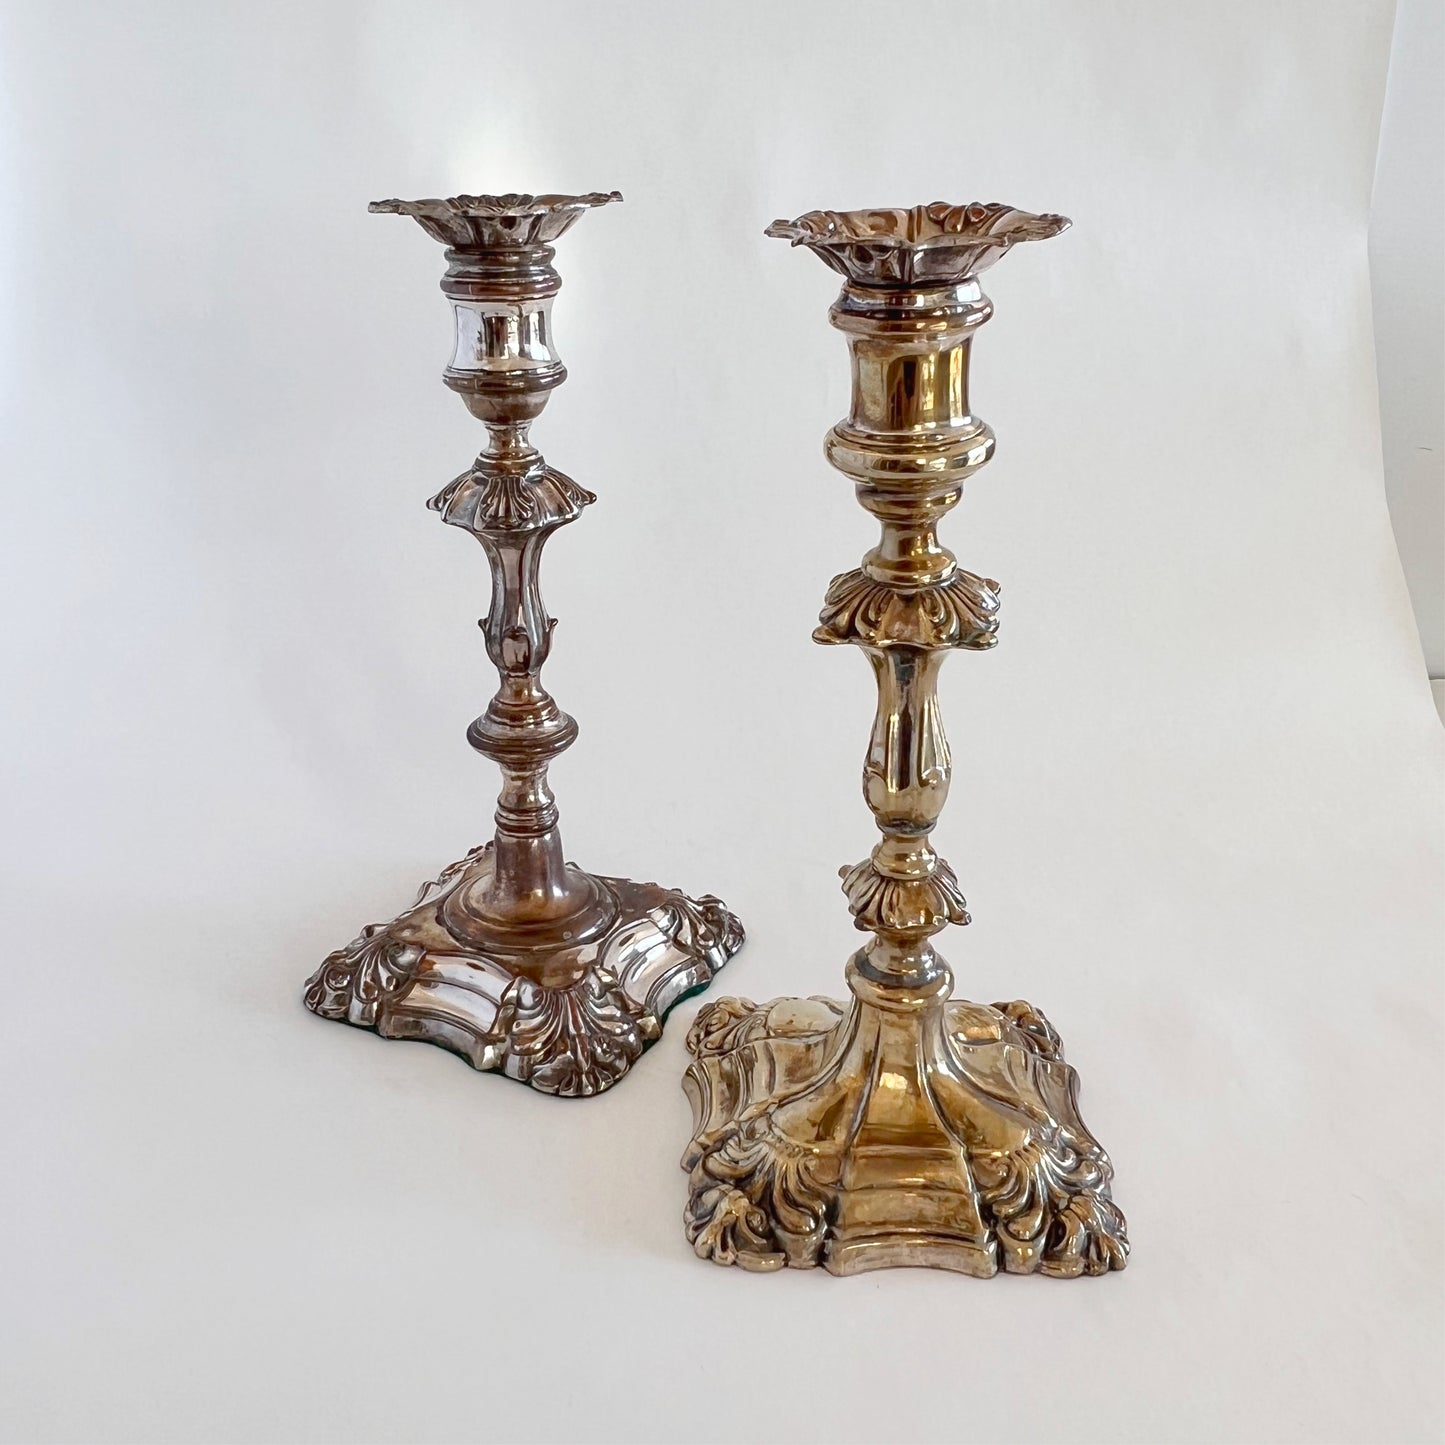 English Edwardian silver-plated candlesticks, set of 2